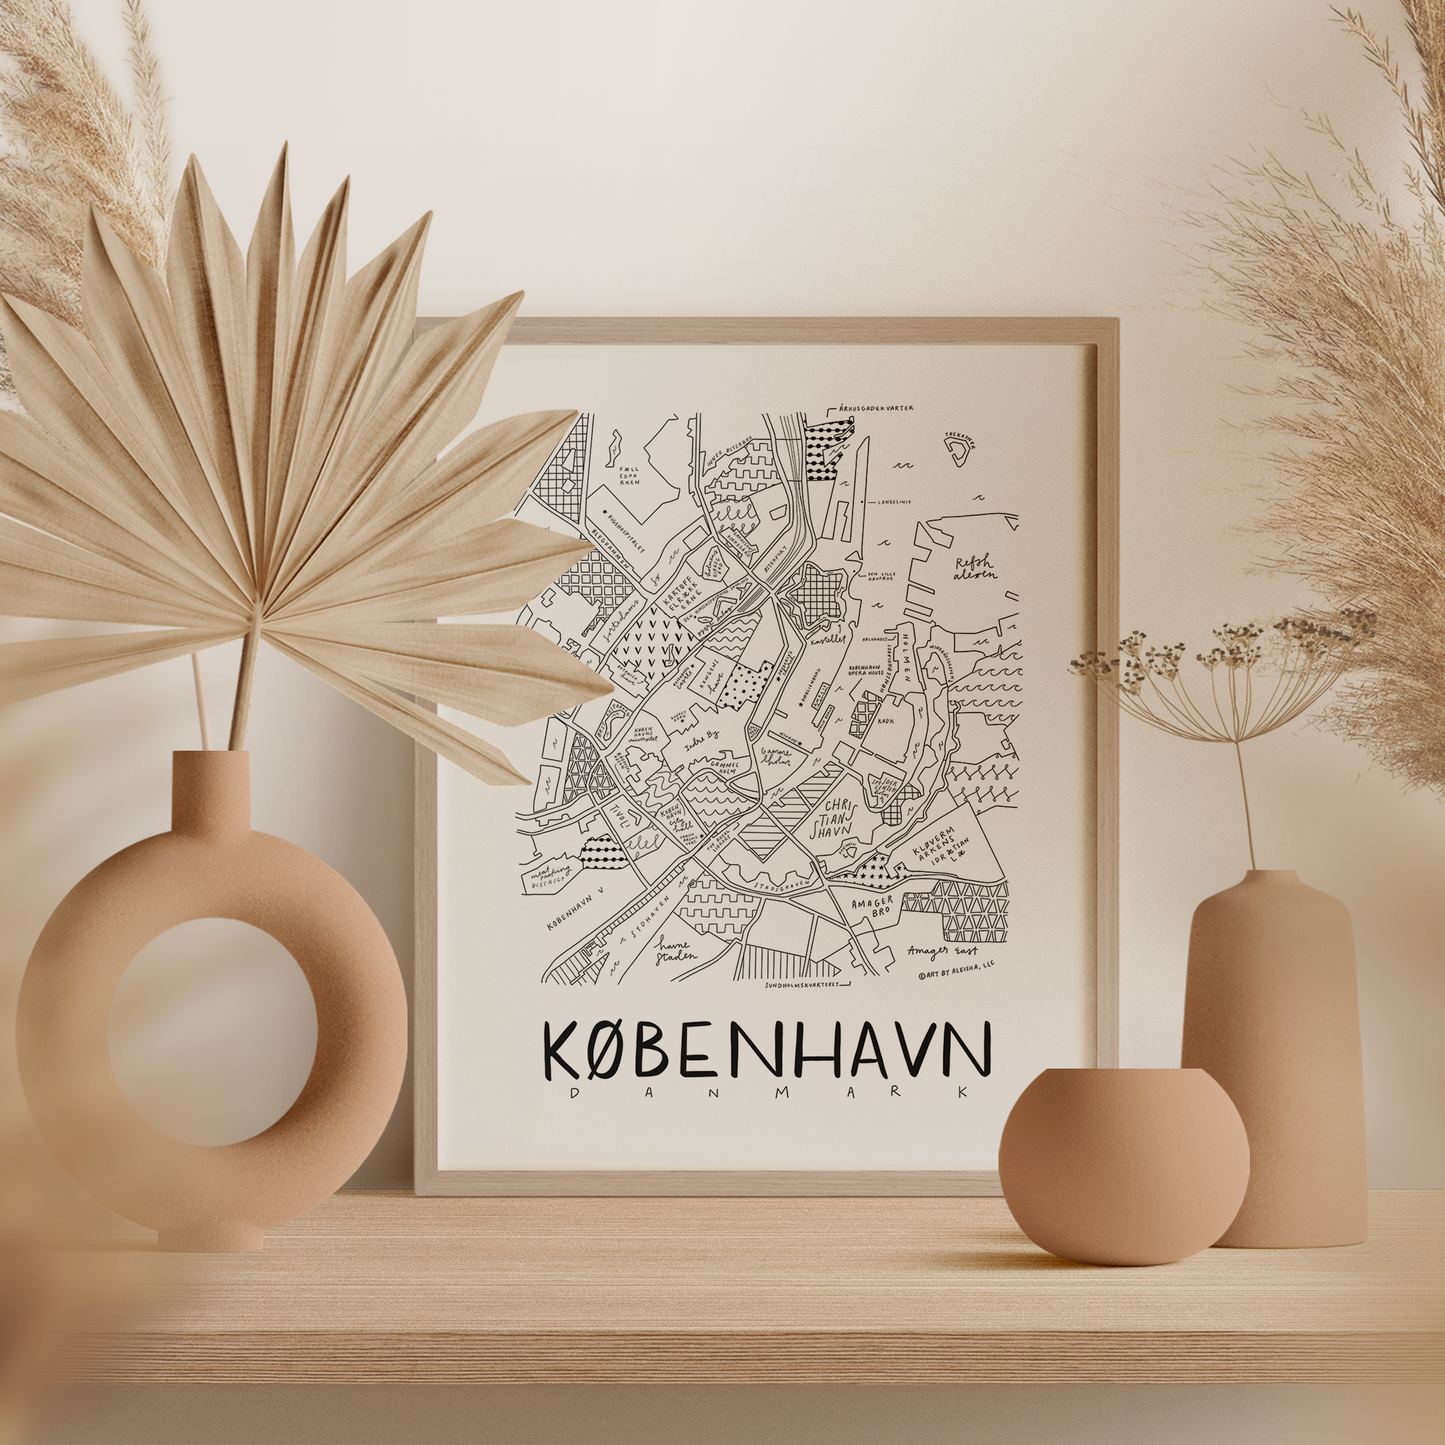 Copenhagen (Kobenhavn) Neighborhood Map Print